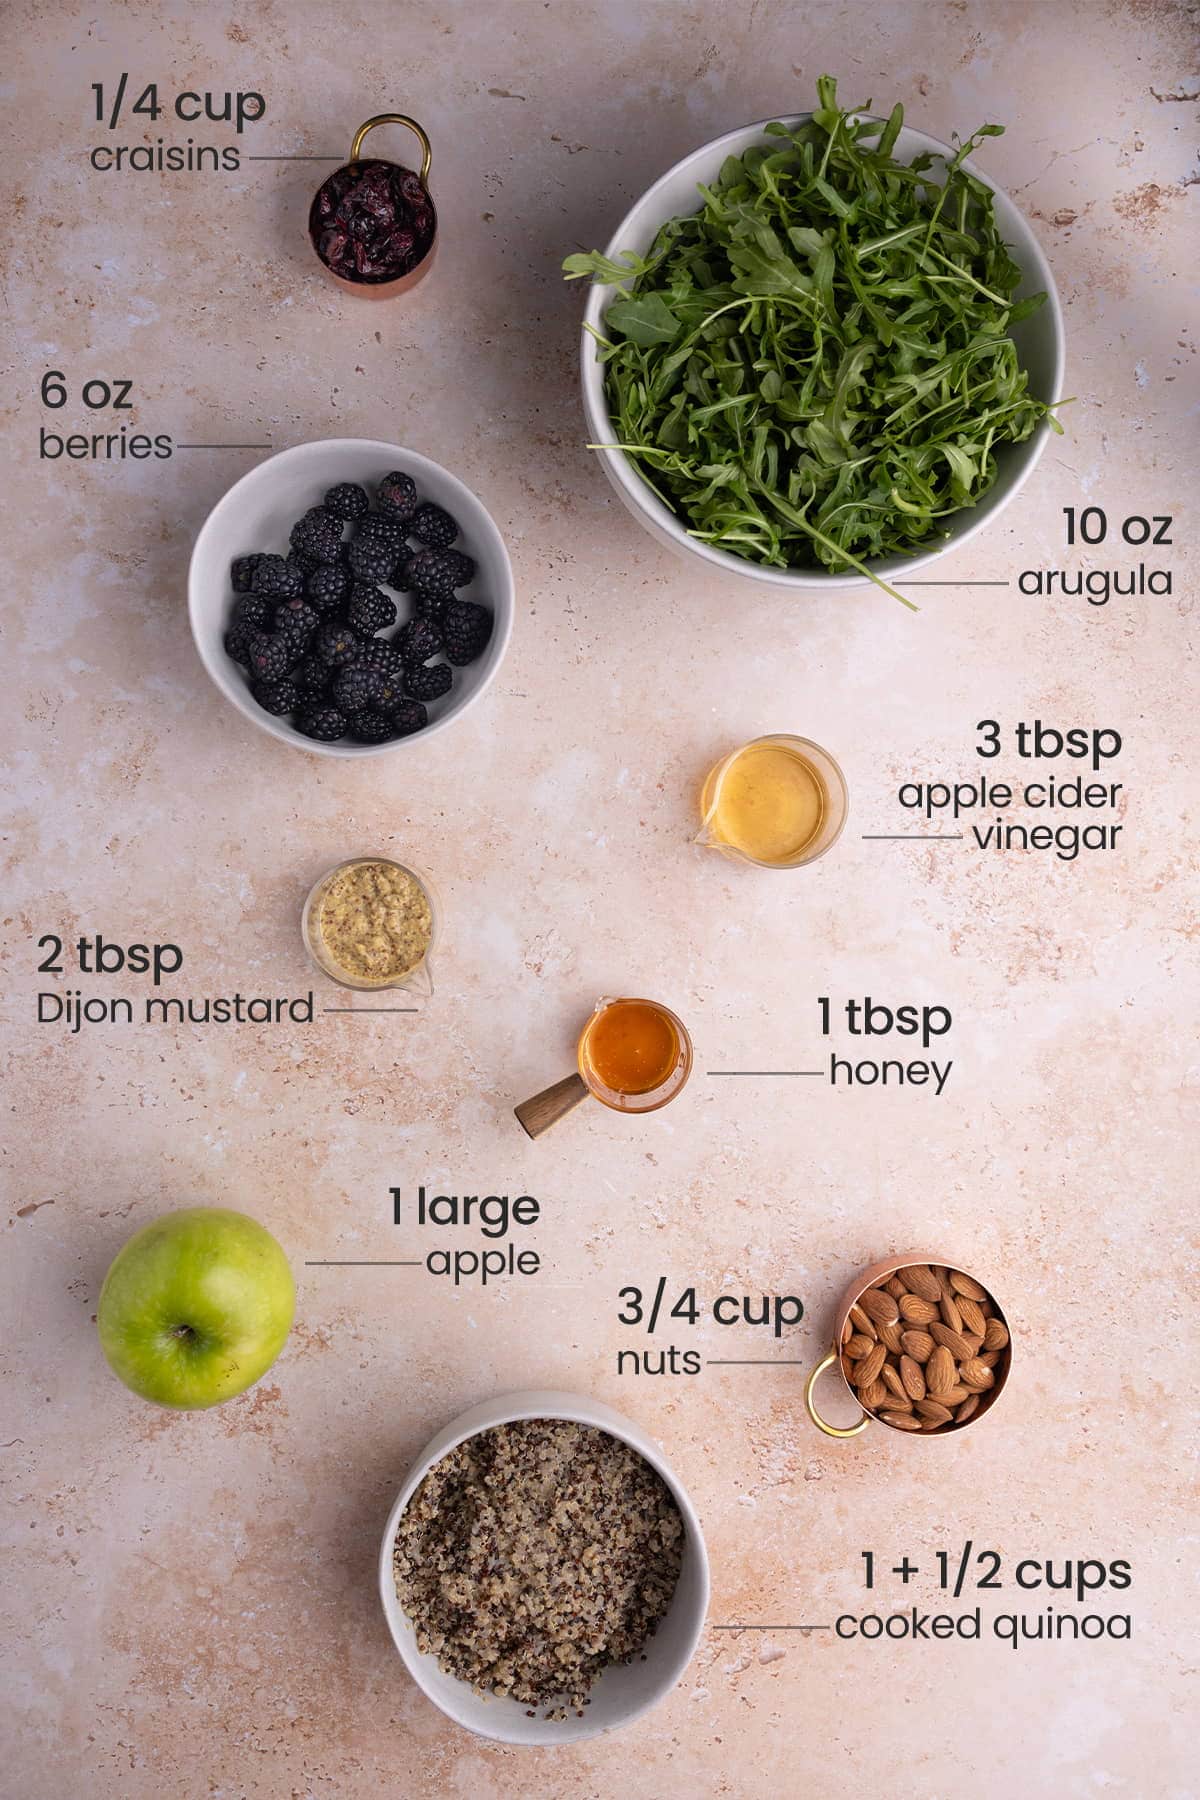 ingredients for quinoa arugula salad - craisins, berries, arugula, apple cider vinegar, dijon mustard, honey, apple, nuts, cooked quinoa